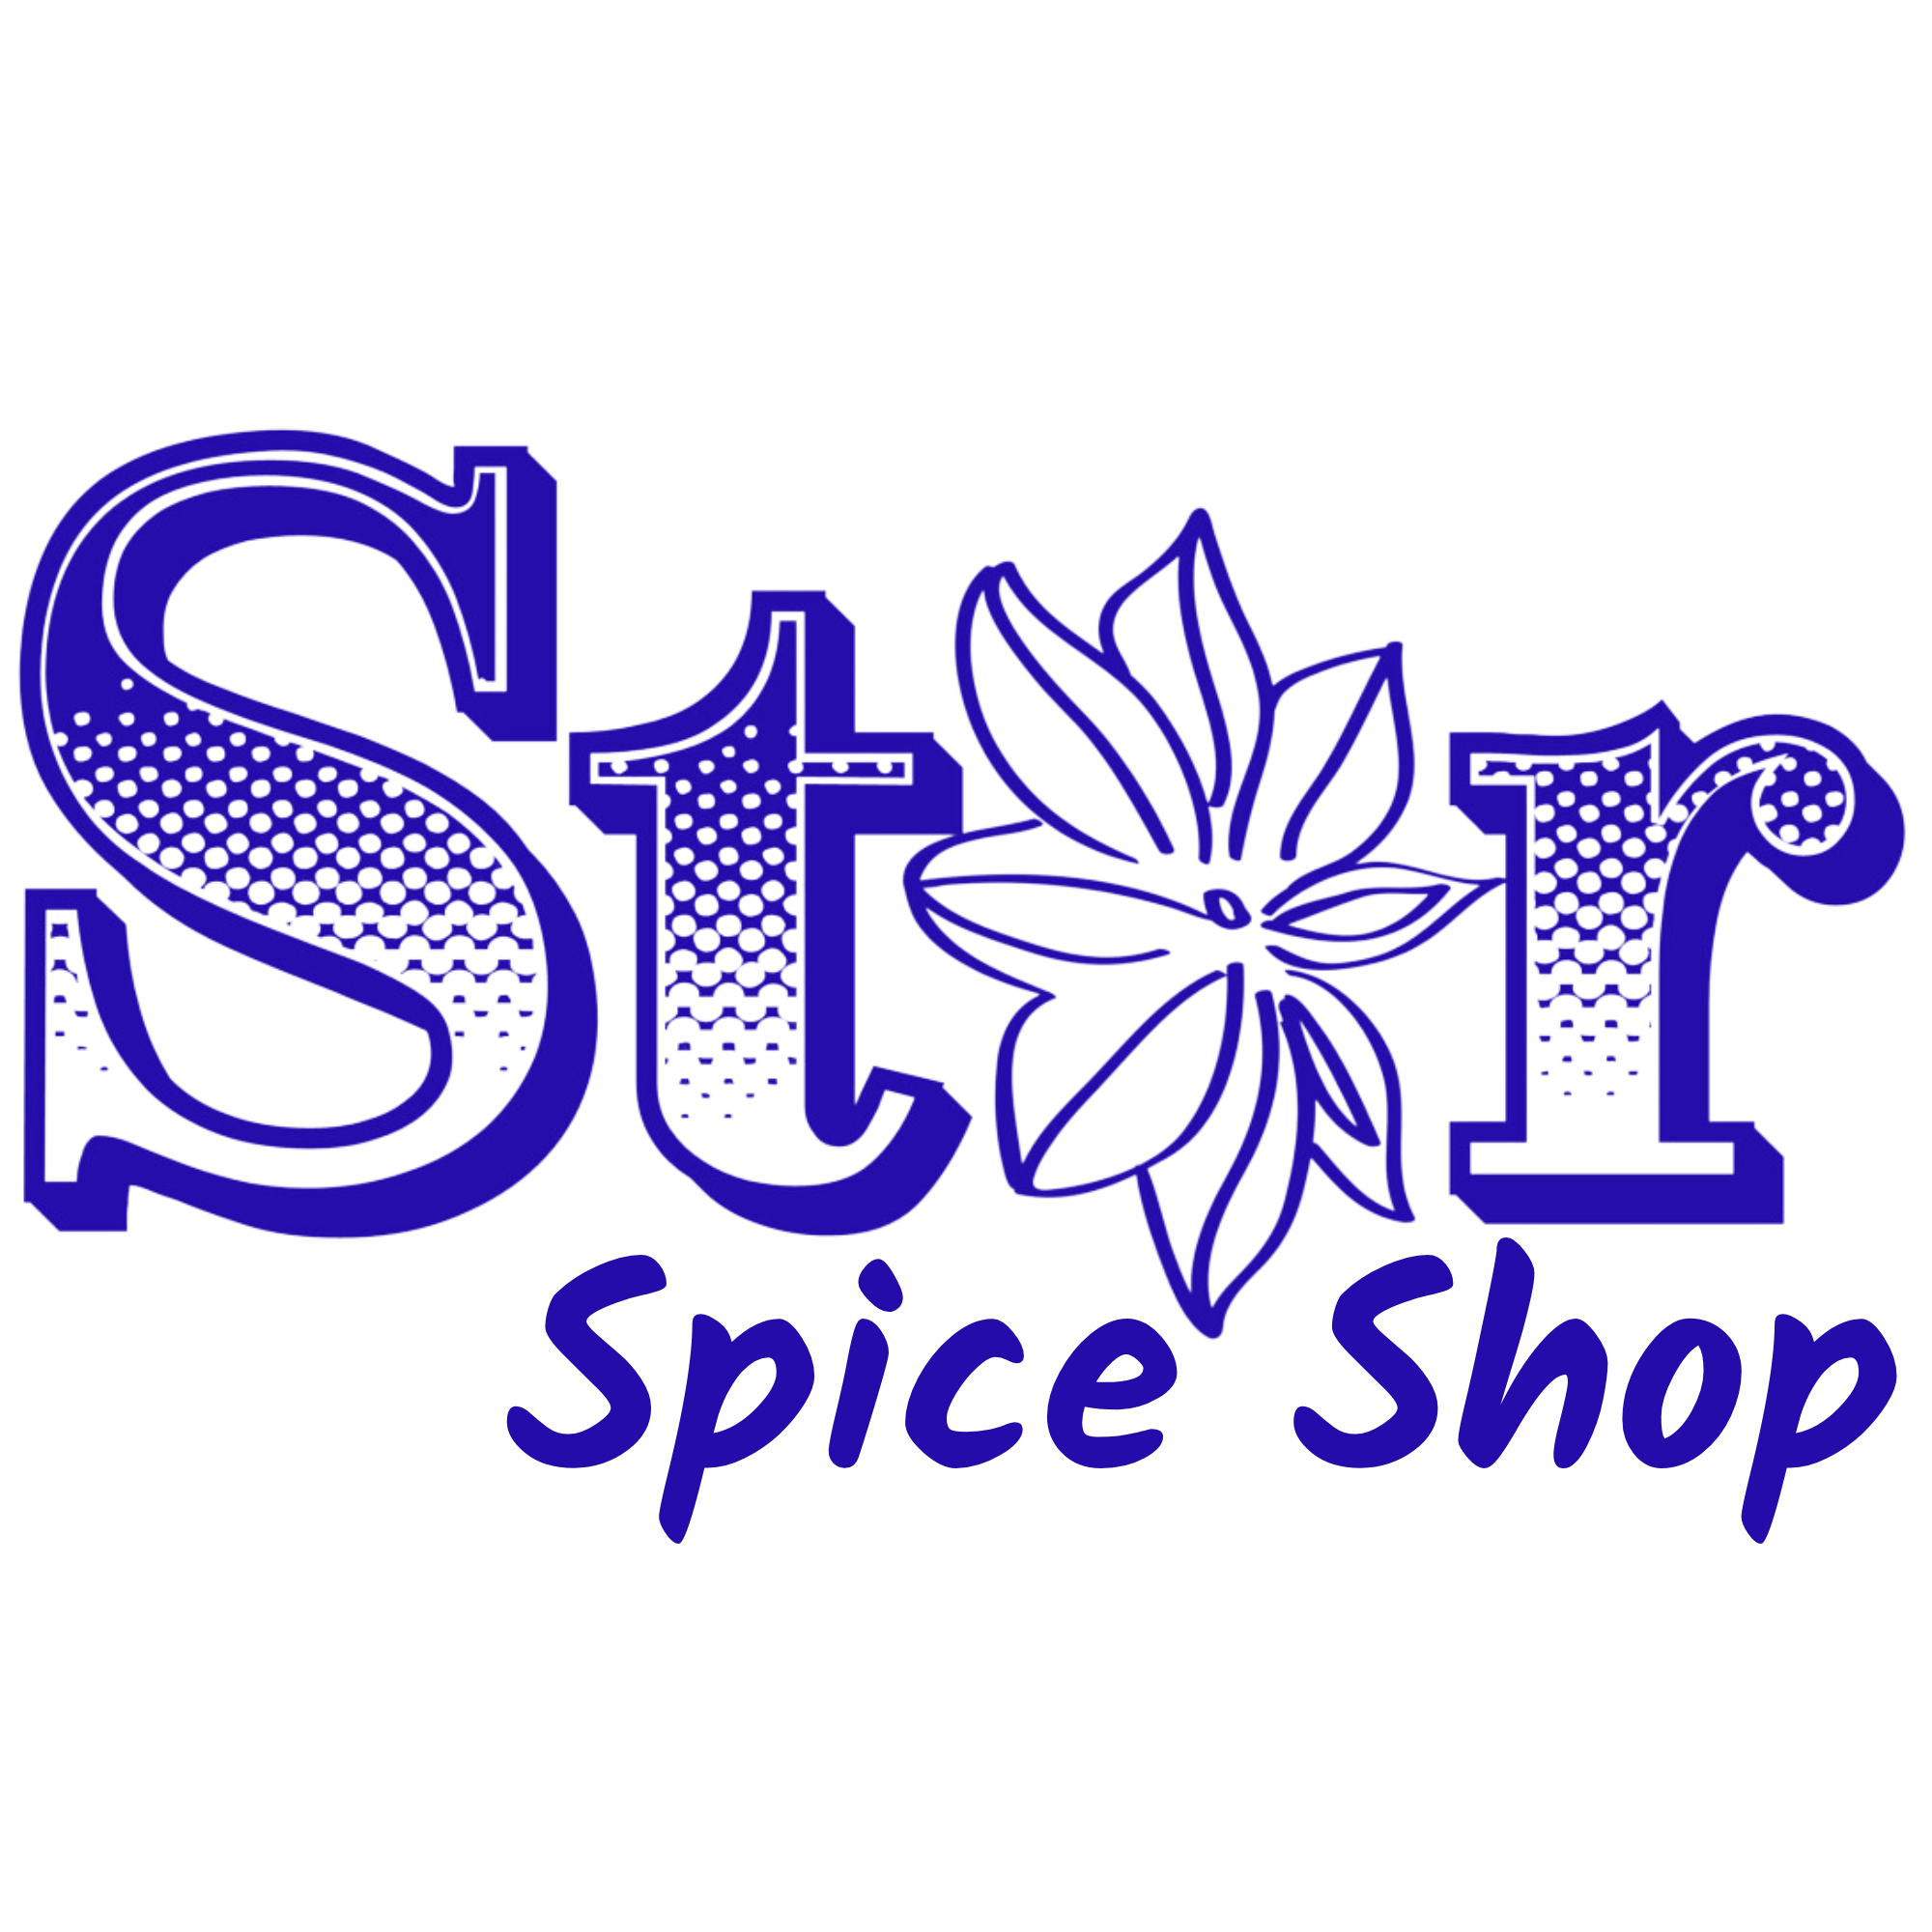 Star Spice Shop